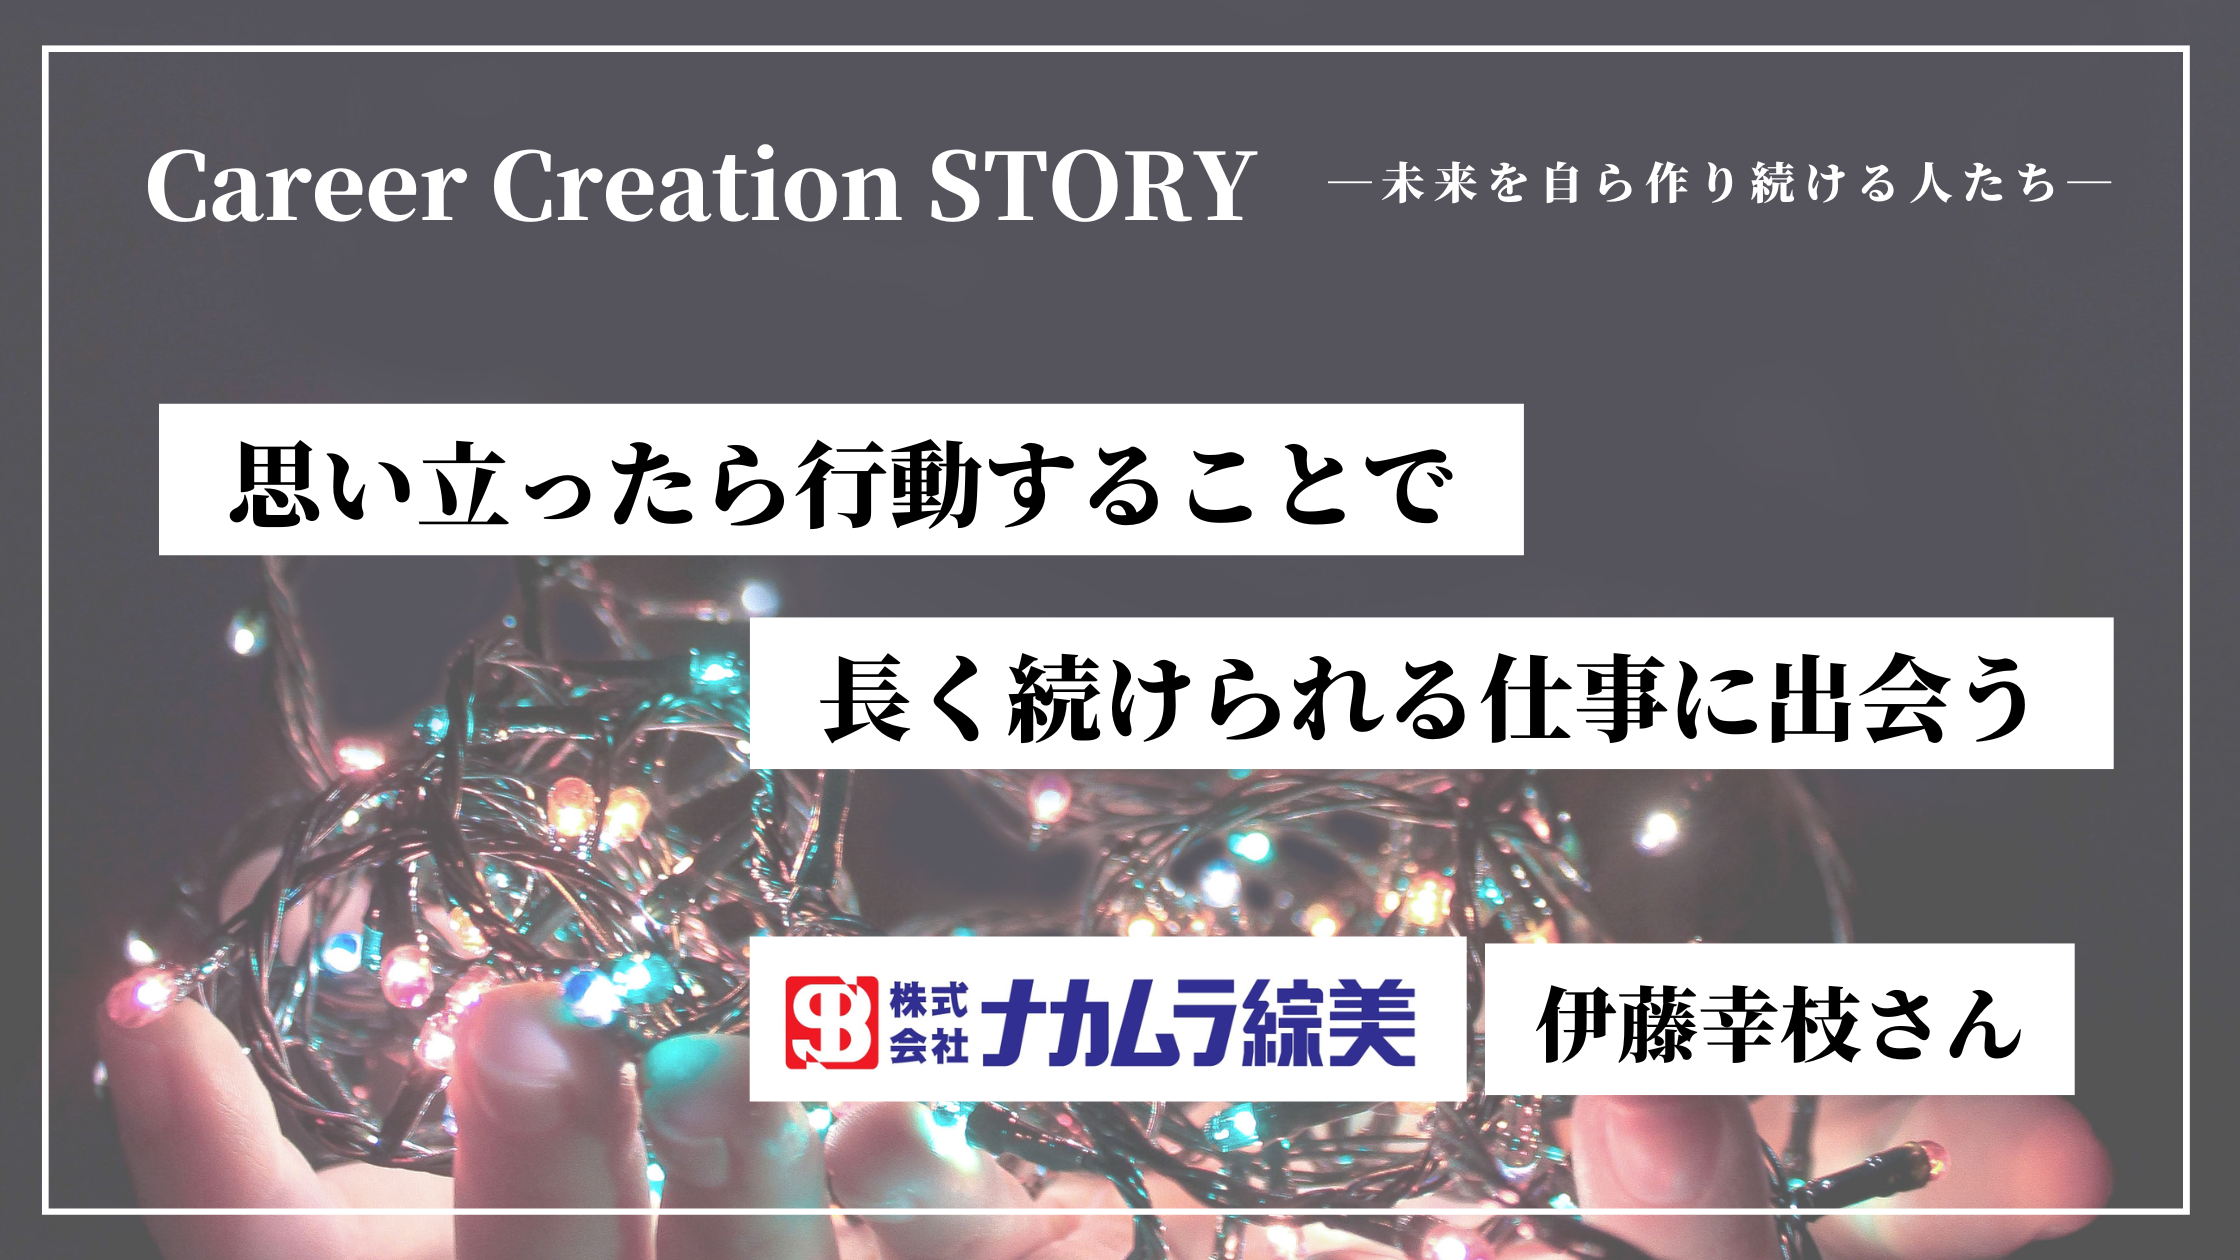 Career Creation STORY #19：株式会社ナカムラ綜美 伊藤幸枝さん